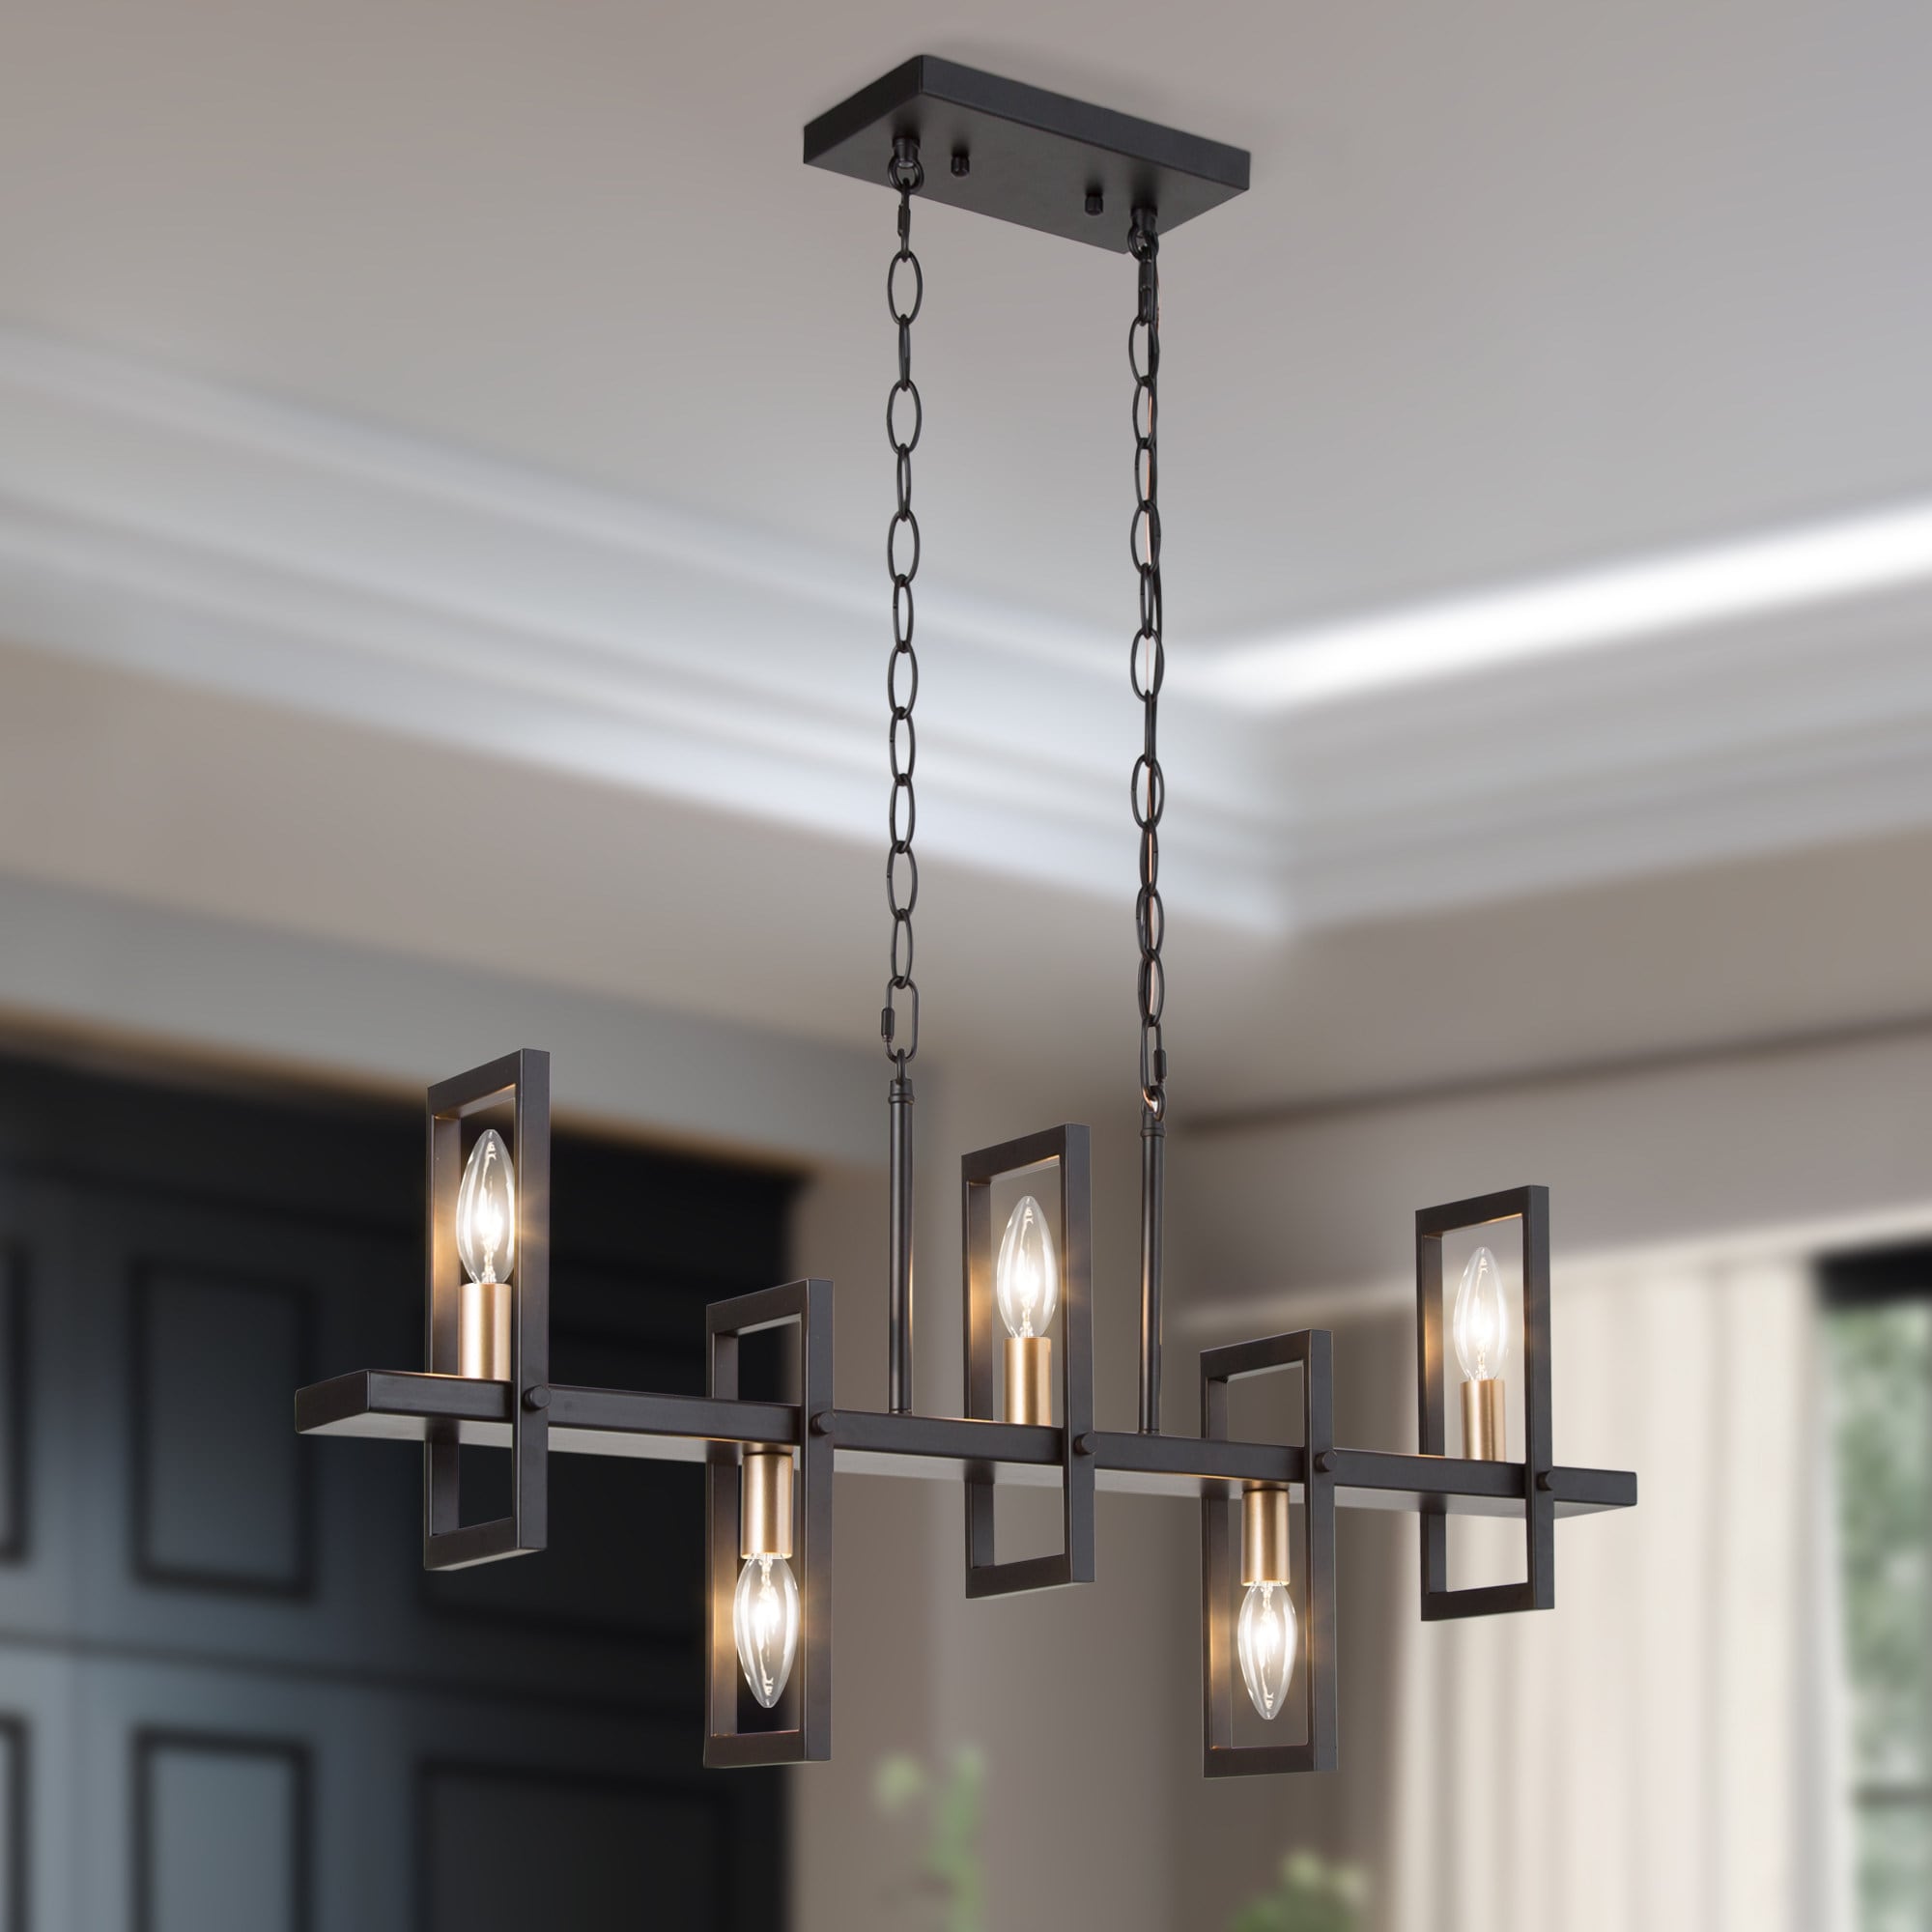  PEESIN Black Pendant Light Fixture Chain, 6 Feet Chandelier  Chain, Hanging Chain Extension